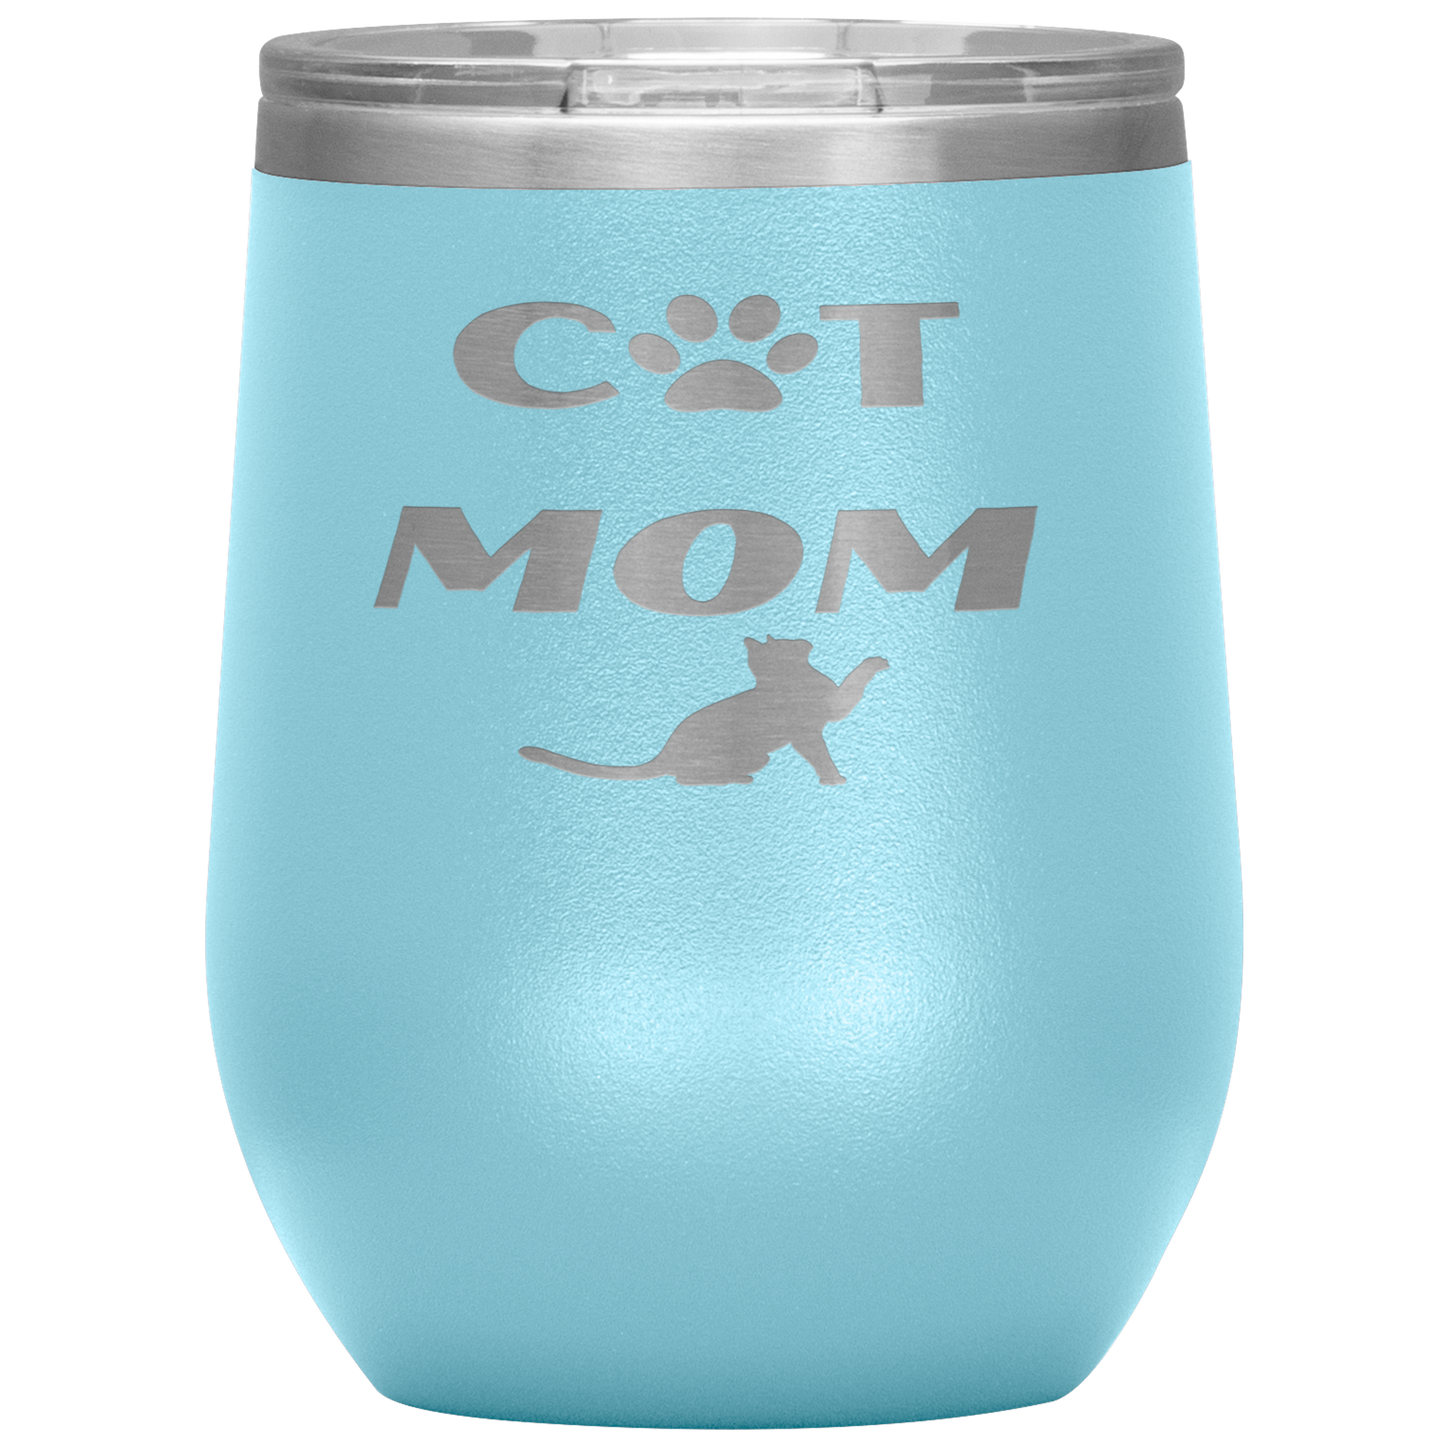 Cat Mom Wine Tumbler - Madison's Mutt Mall